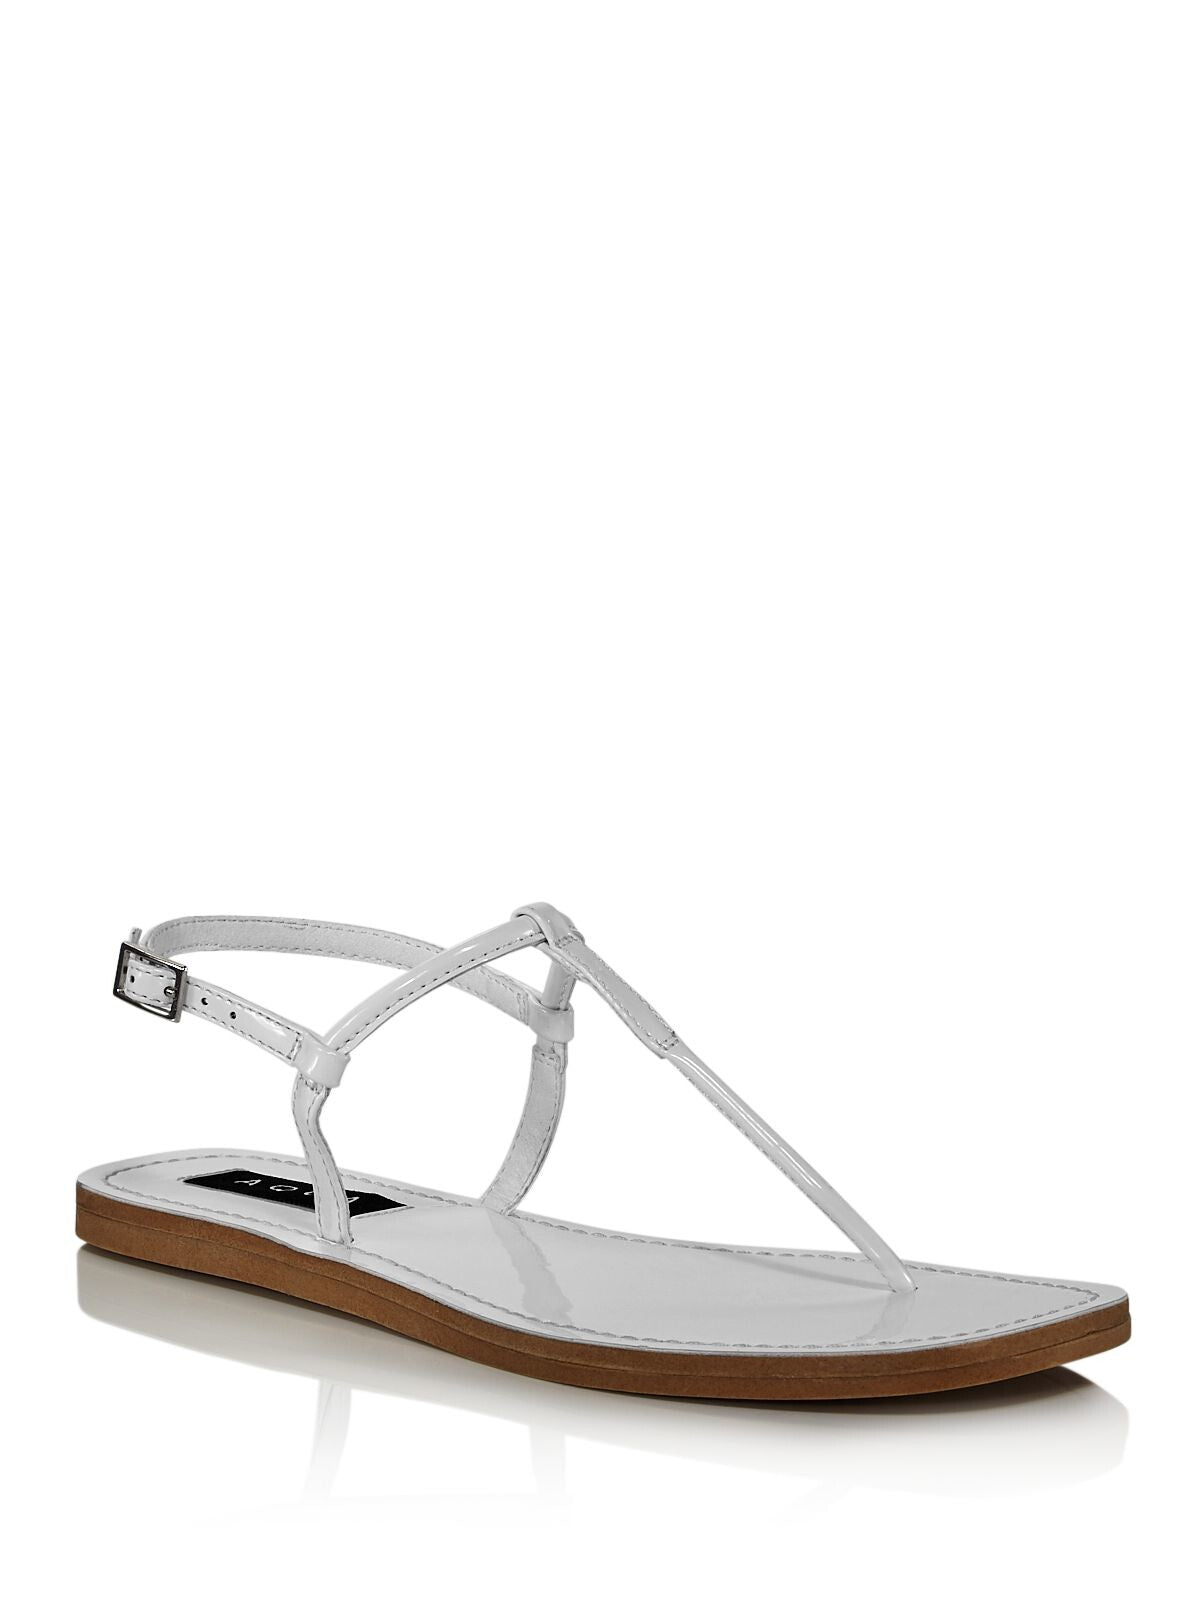 AQUA Womens White T-Strap Zen Round Toe Buckle Thong Sandals Shoes 7 M